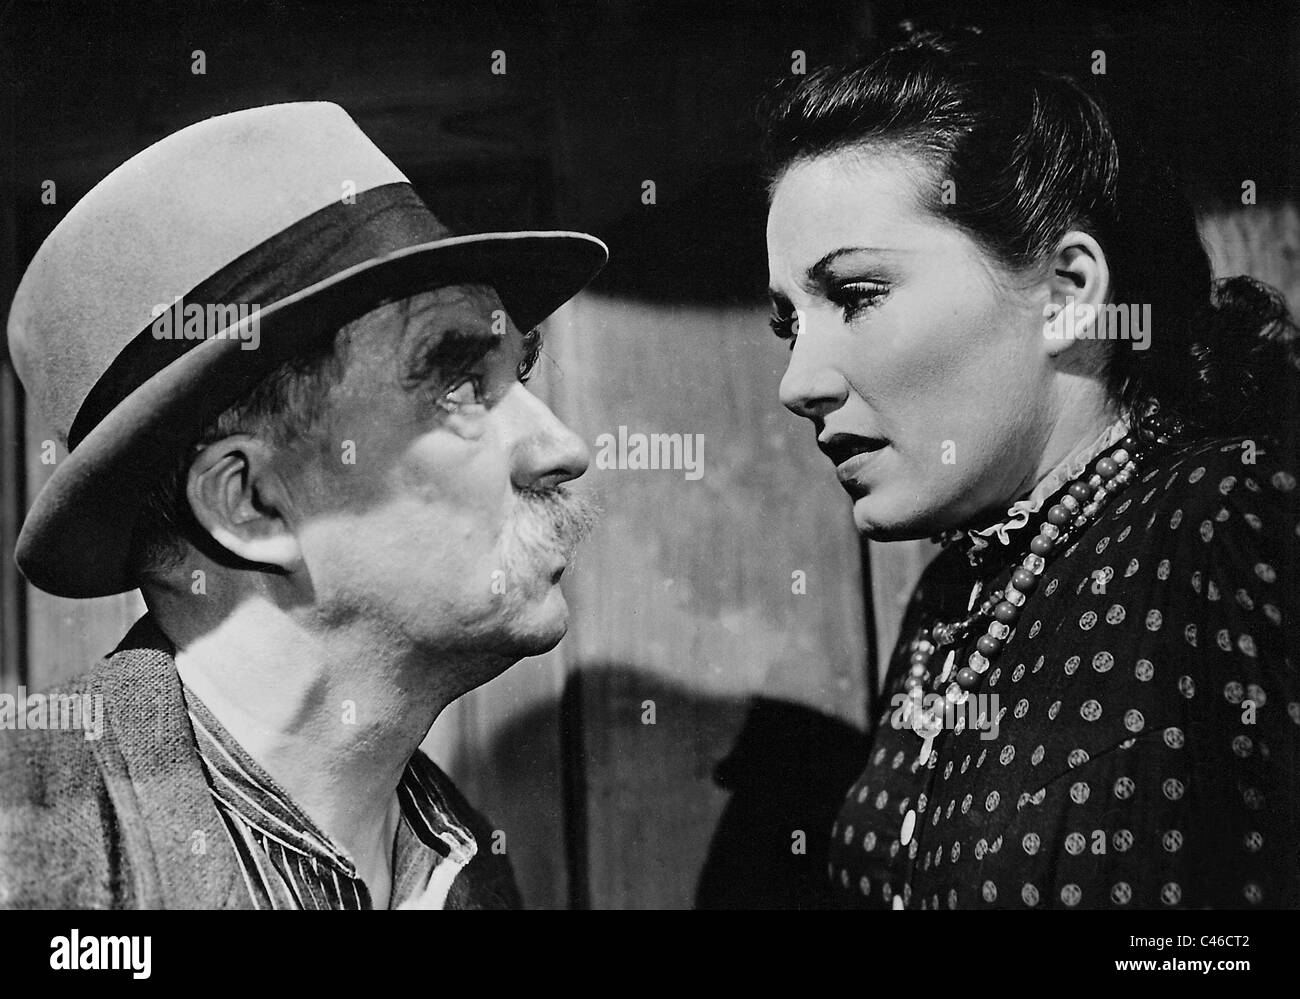 Nikolas Kolin und Brigitte Horney in "Feinde", 1940 Stockfoto